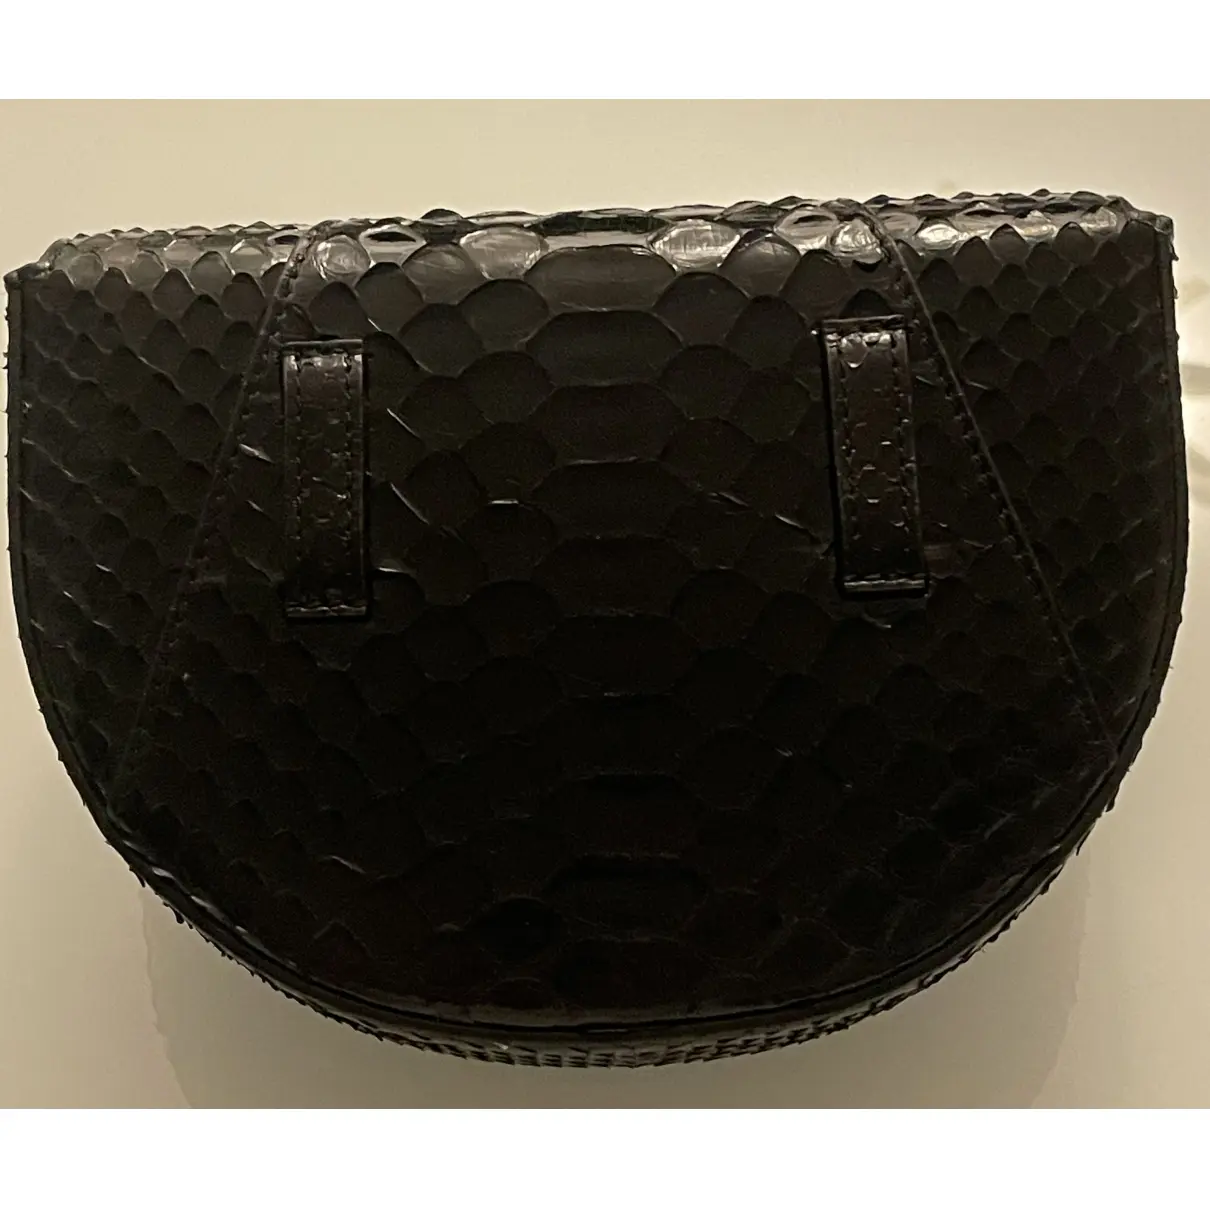 Buy Versace Virtus python handbag online